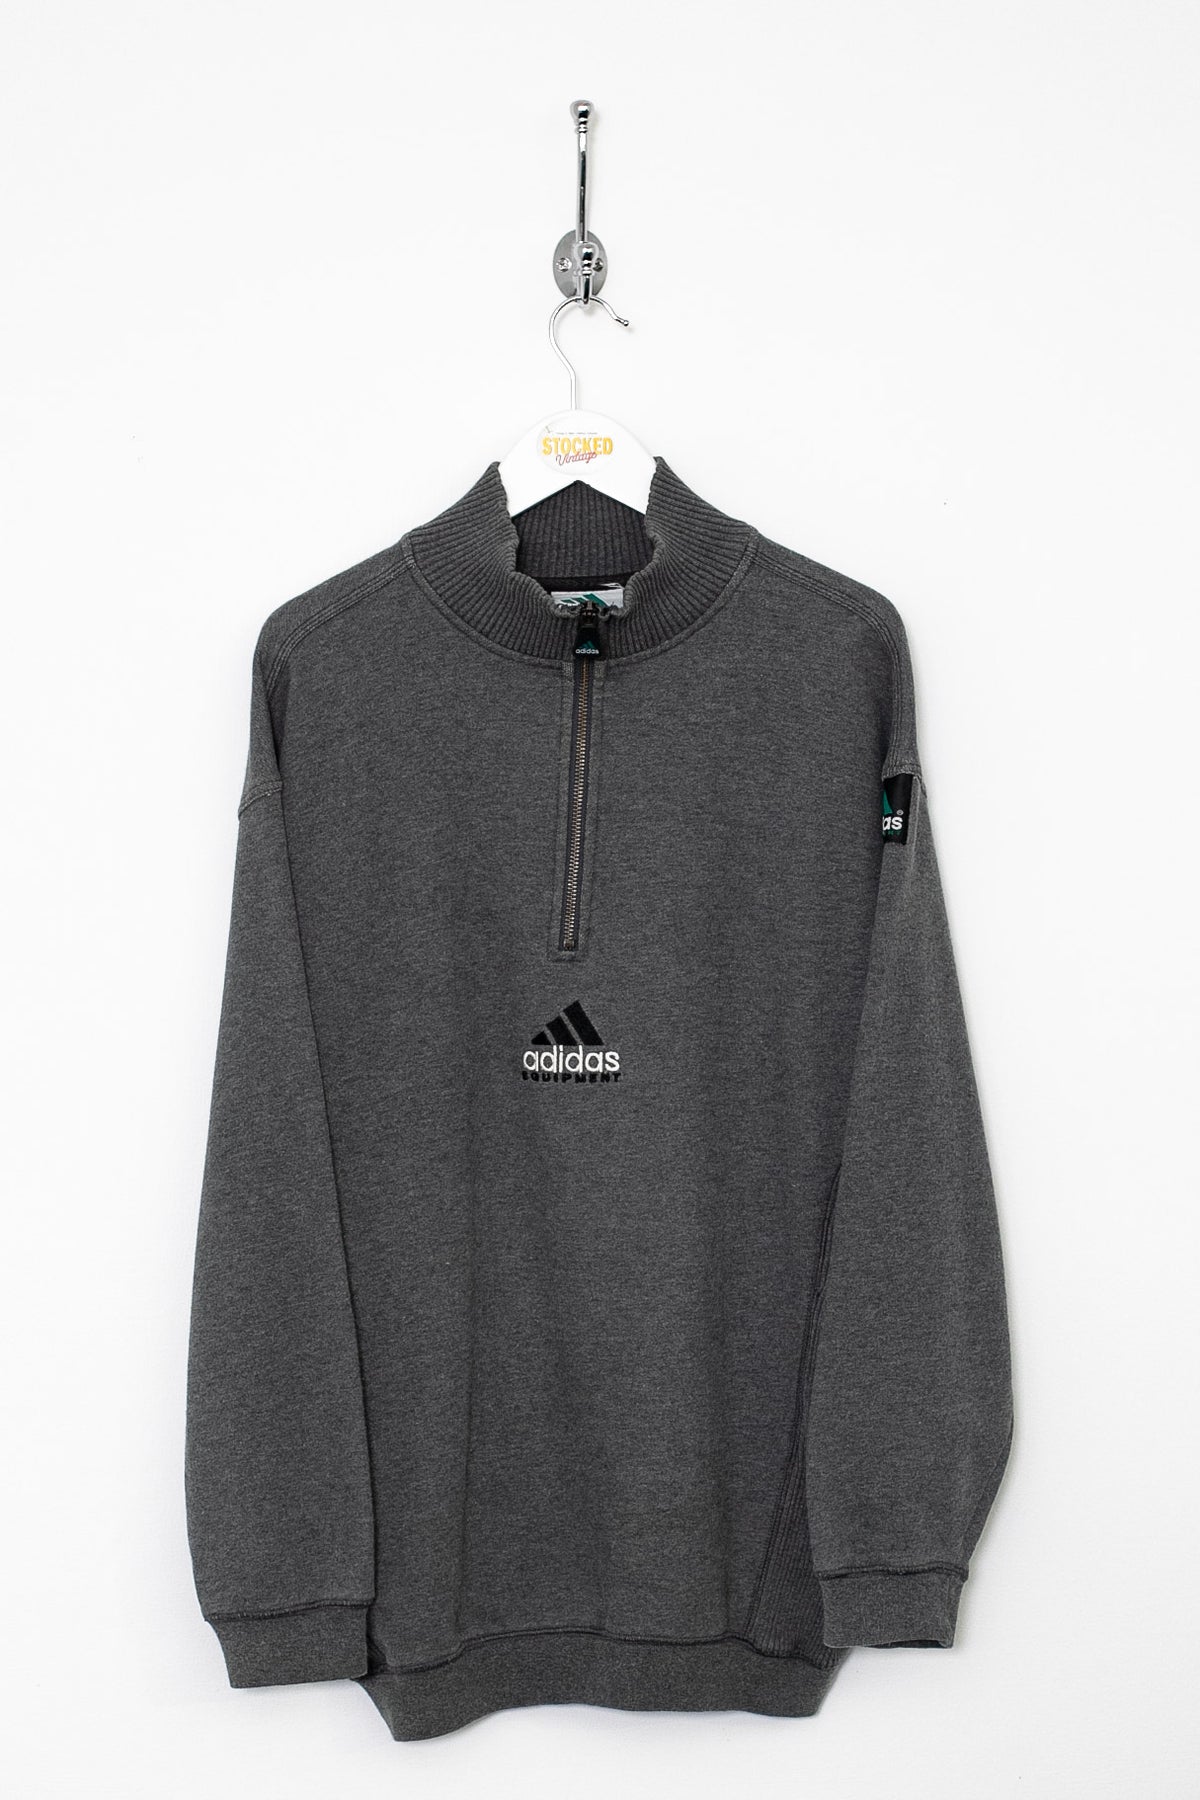 00s Adidas Equipment 1/4 Zip Sweatshirt (M)